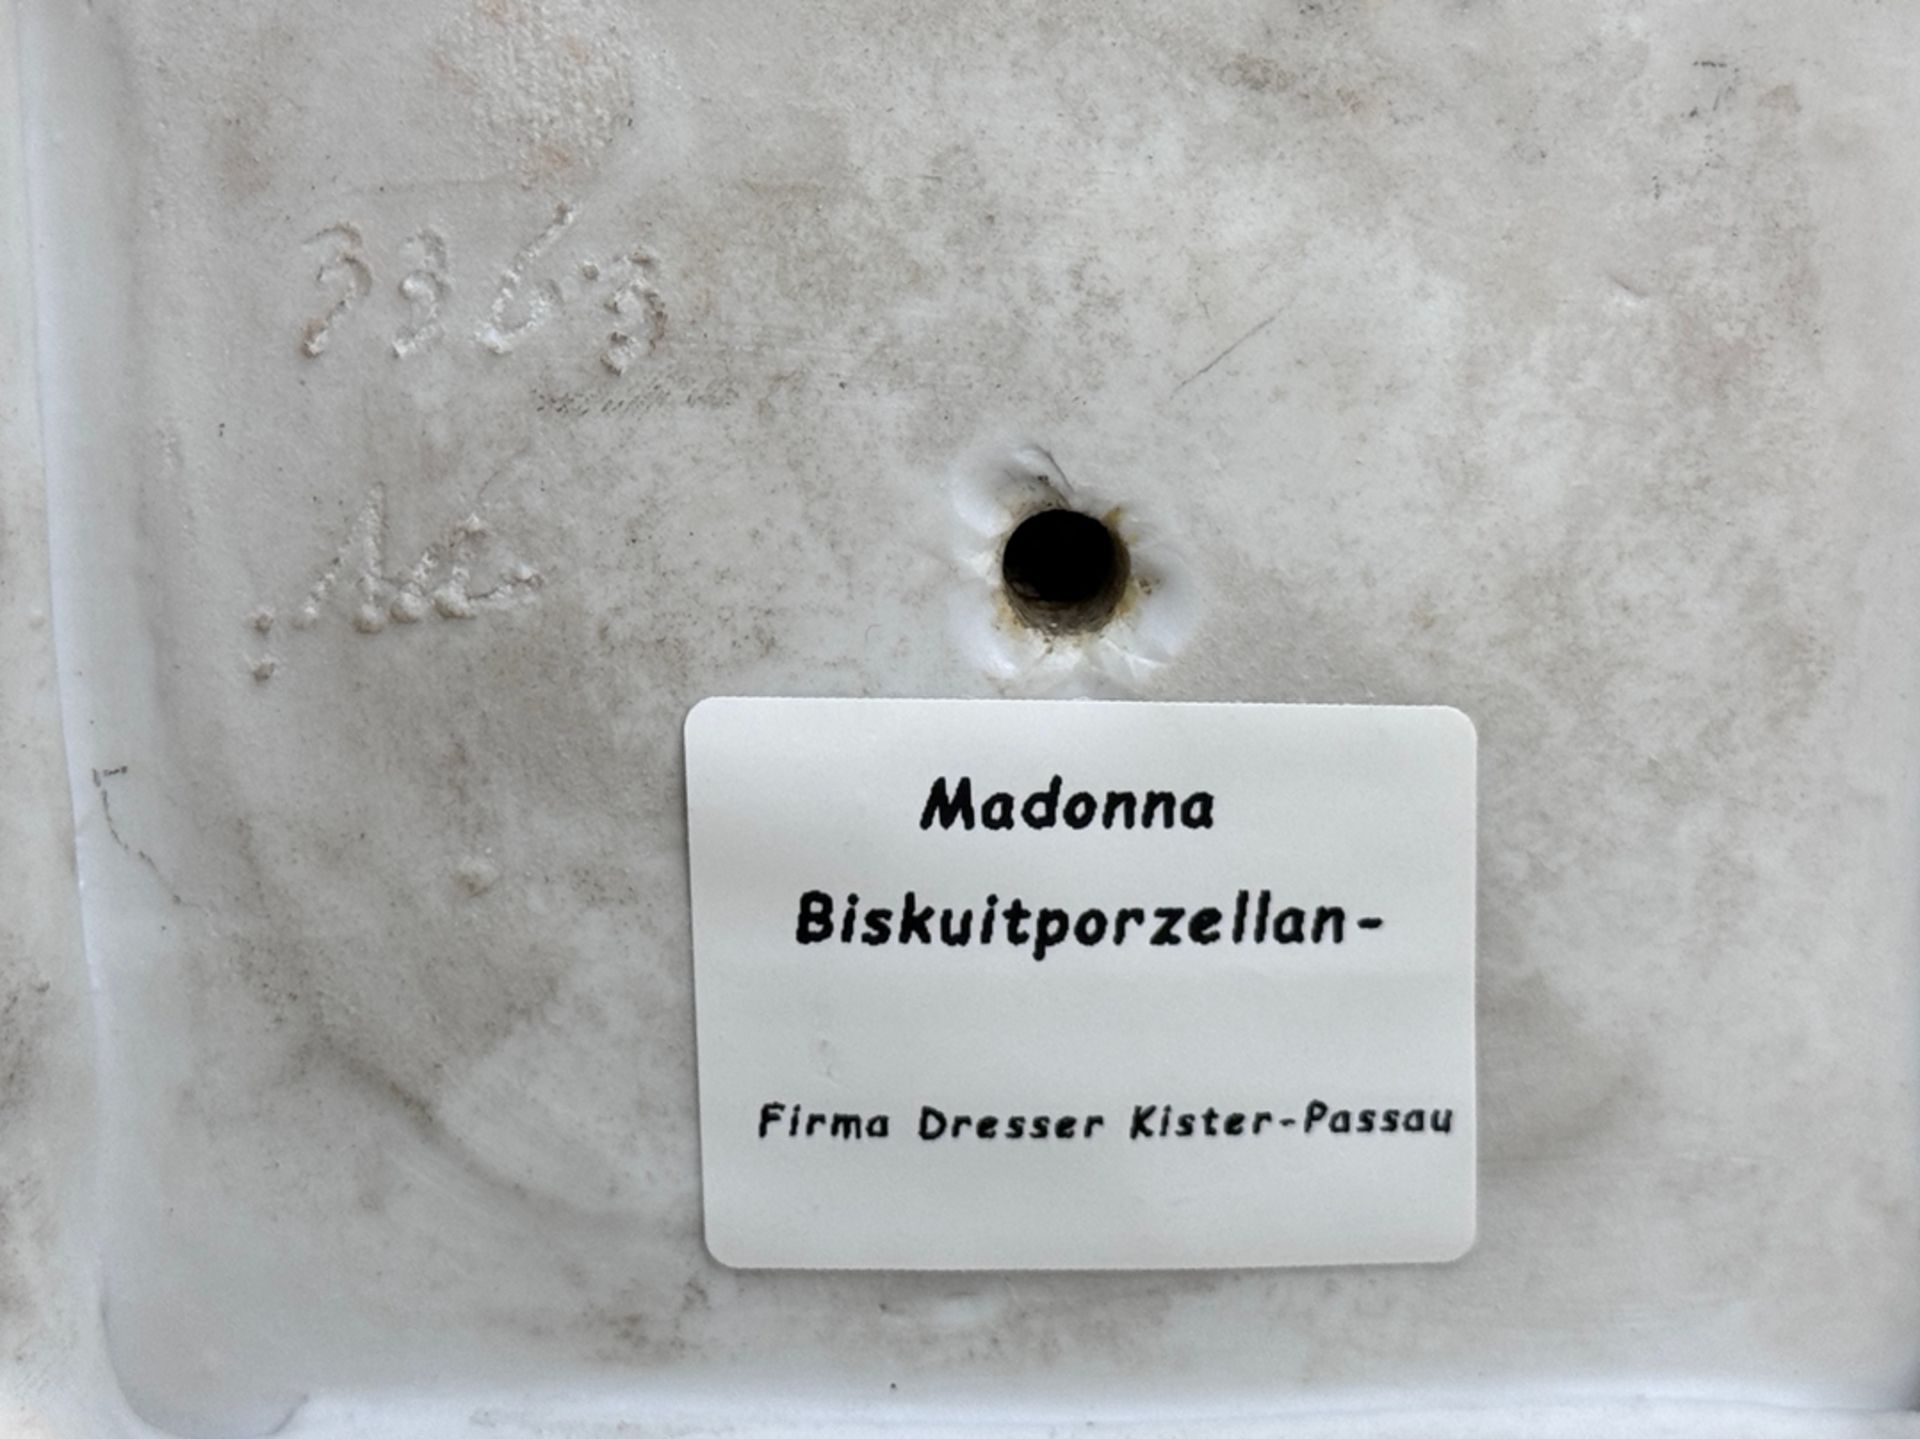 Crescent moon Madonna, biscuit porcelain, probably Dressel & Kister, Bavaria, finely polychrome pai - Image 3 of 3